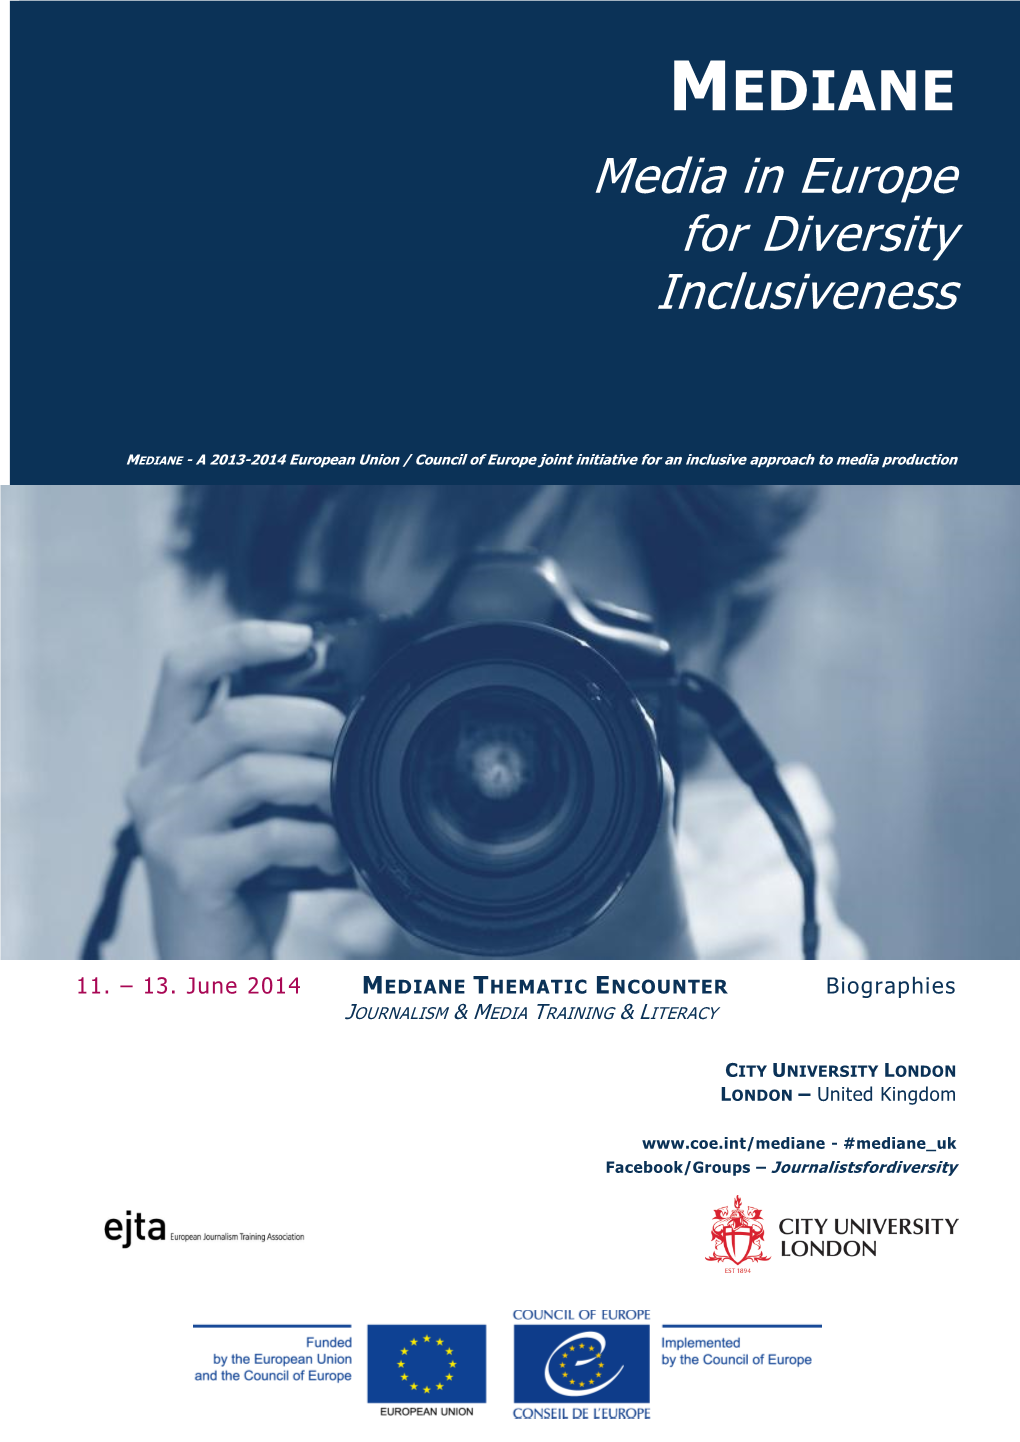 MEDIANE Media in Europe for Diversity Inclusiveness